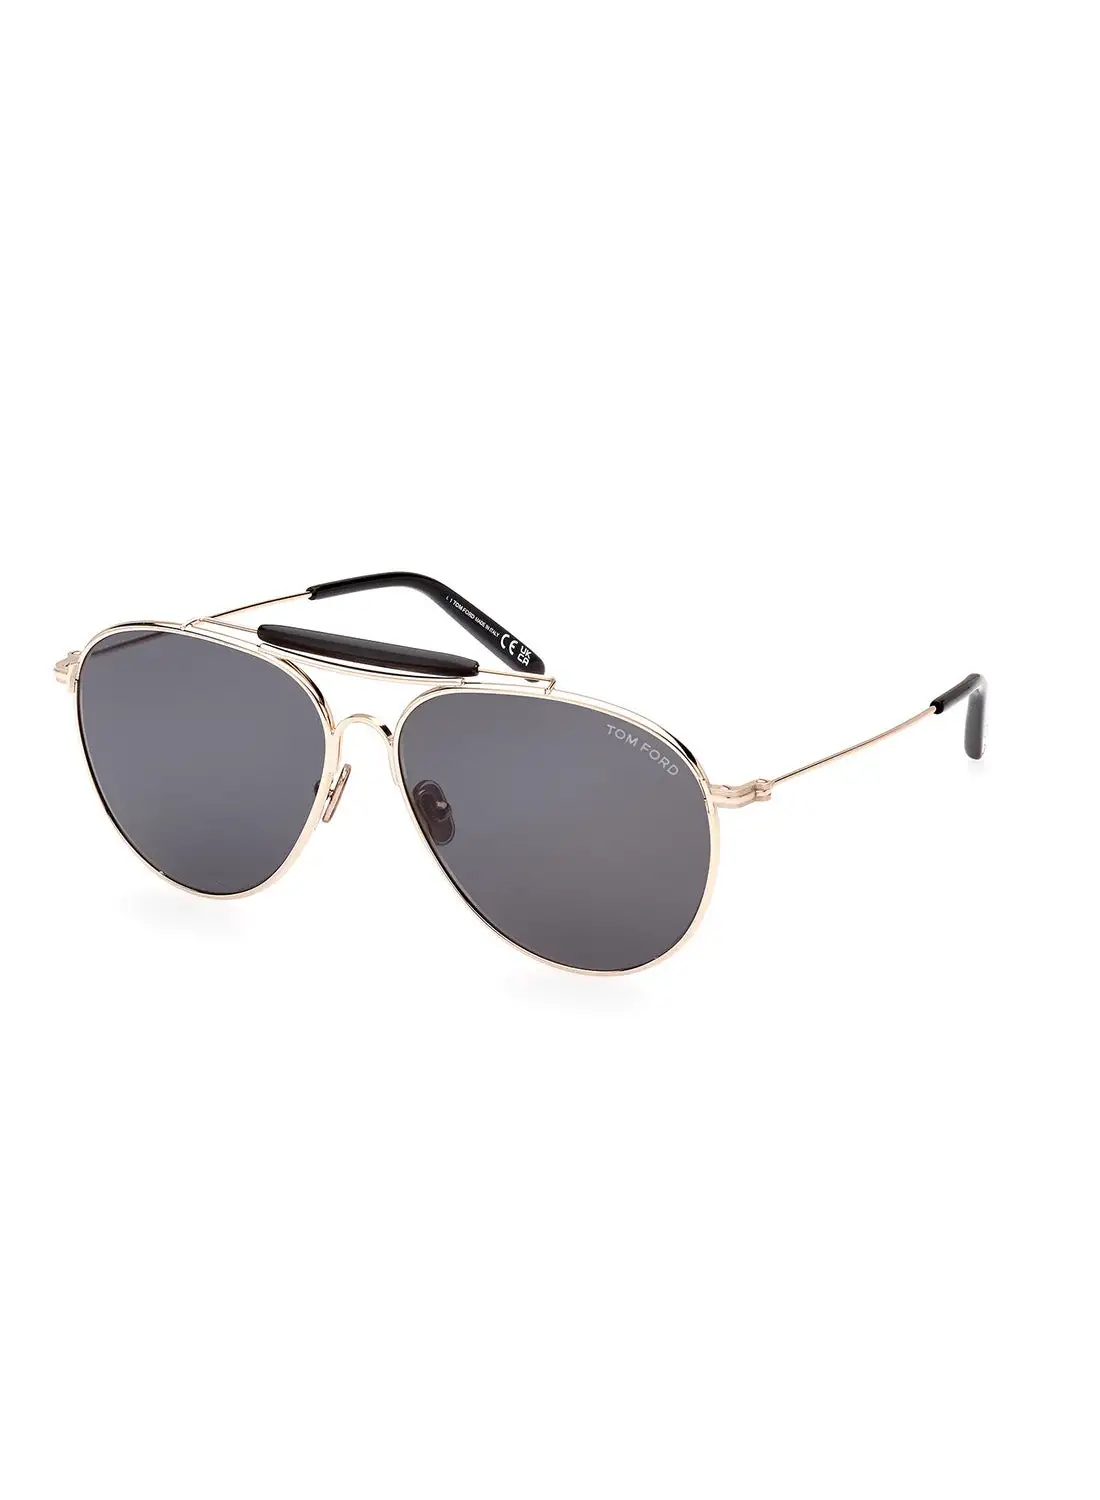 TOM FORD Men's UV Protection Pilot Sunglasses - FT099528A59 - Lens Size: 59 Mm